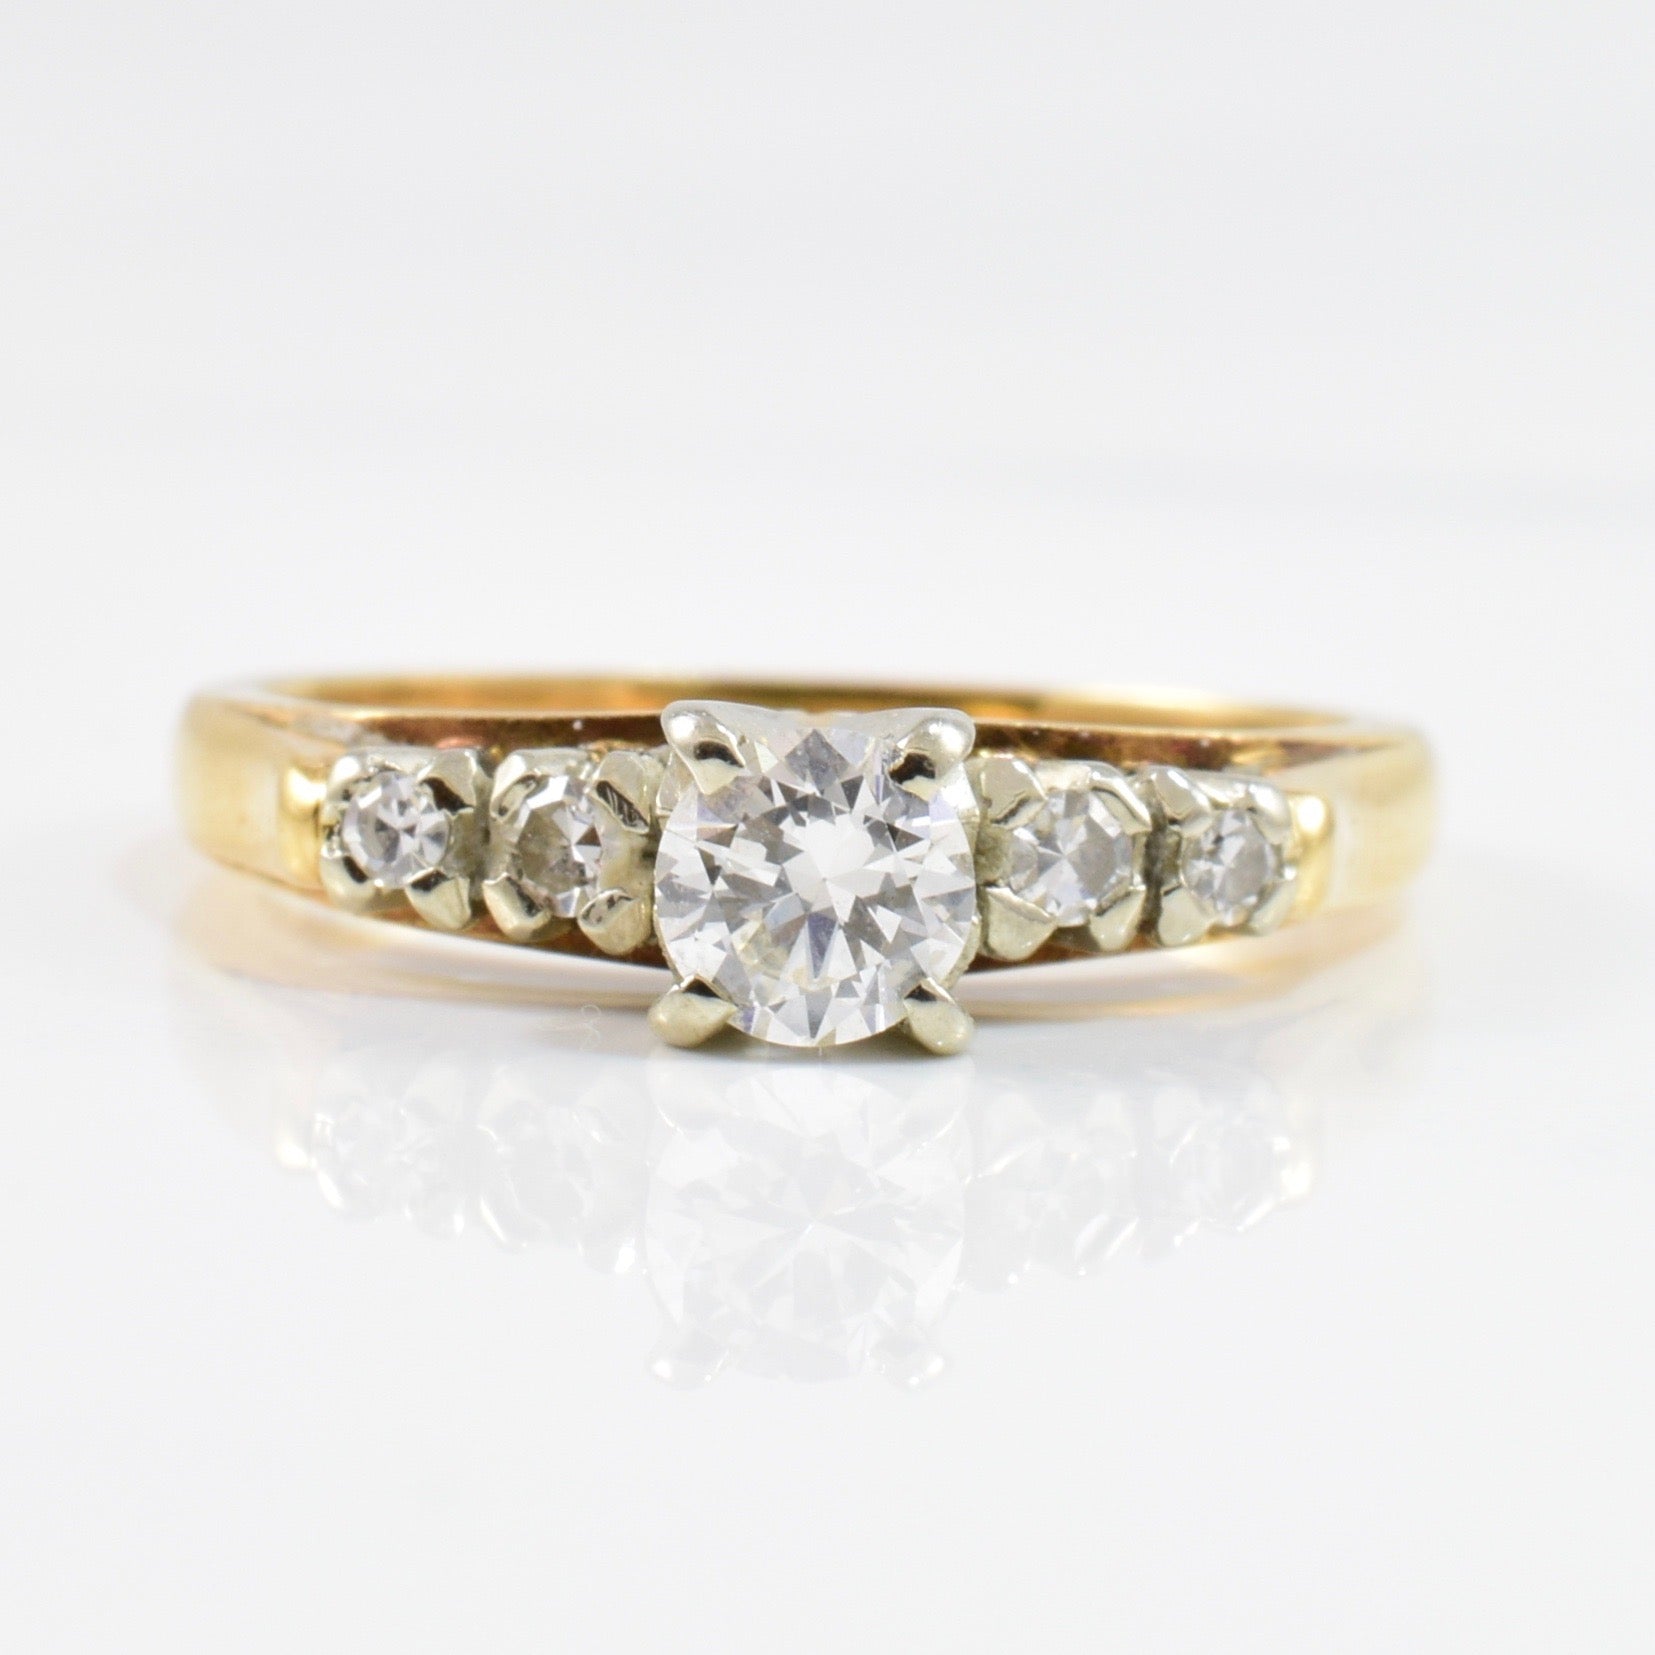 'Birks' Retro Era Diamond Engagement Ring | 0.32 ctw SZ 4.25 |